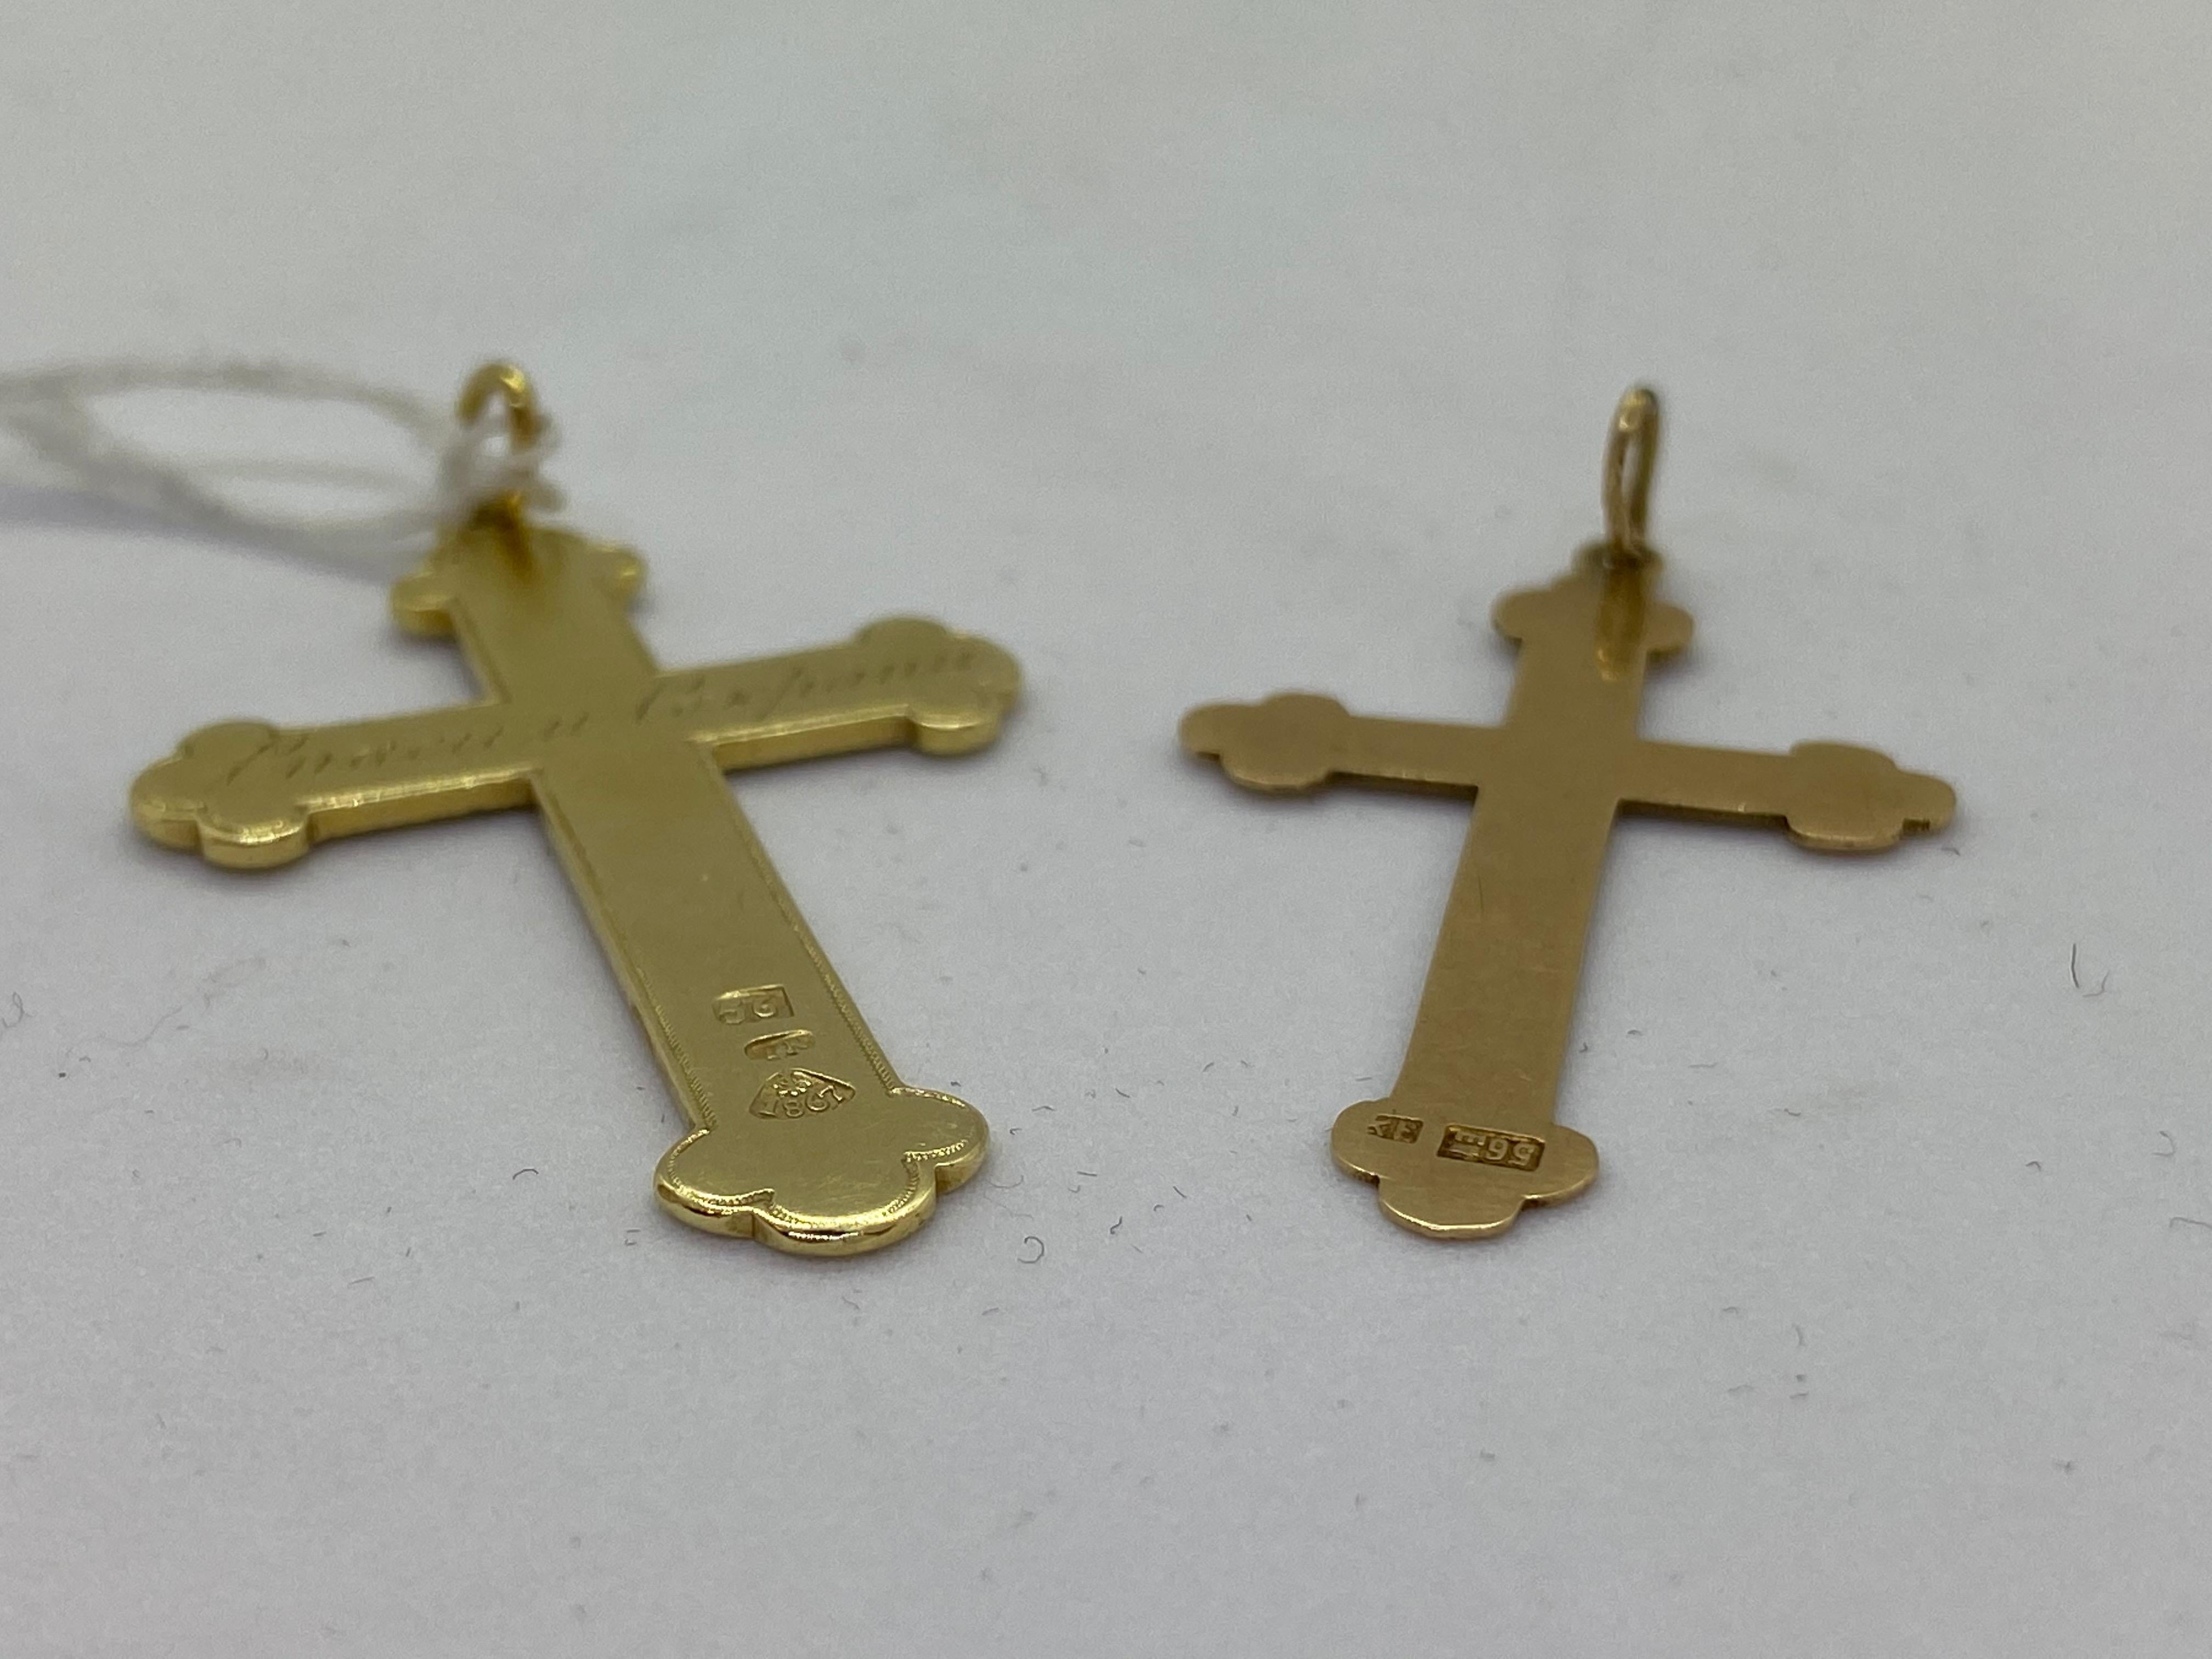 14 Carat Yellow Gold Cross Russia and Estonia Pendant Necklaces 1